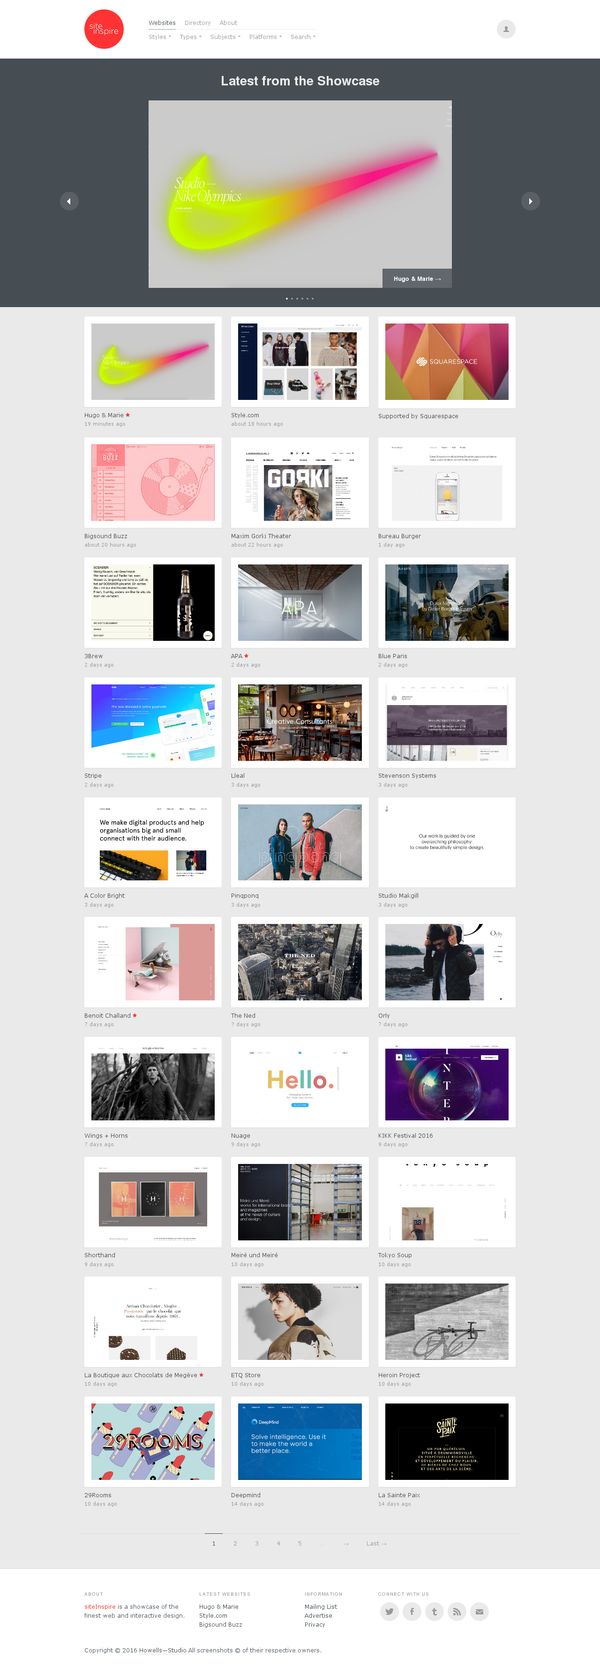 siteInspire - Web Design Inspiration